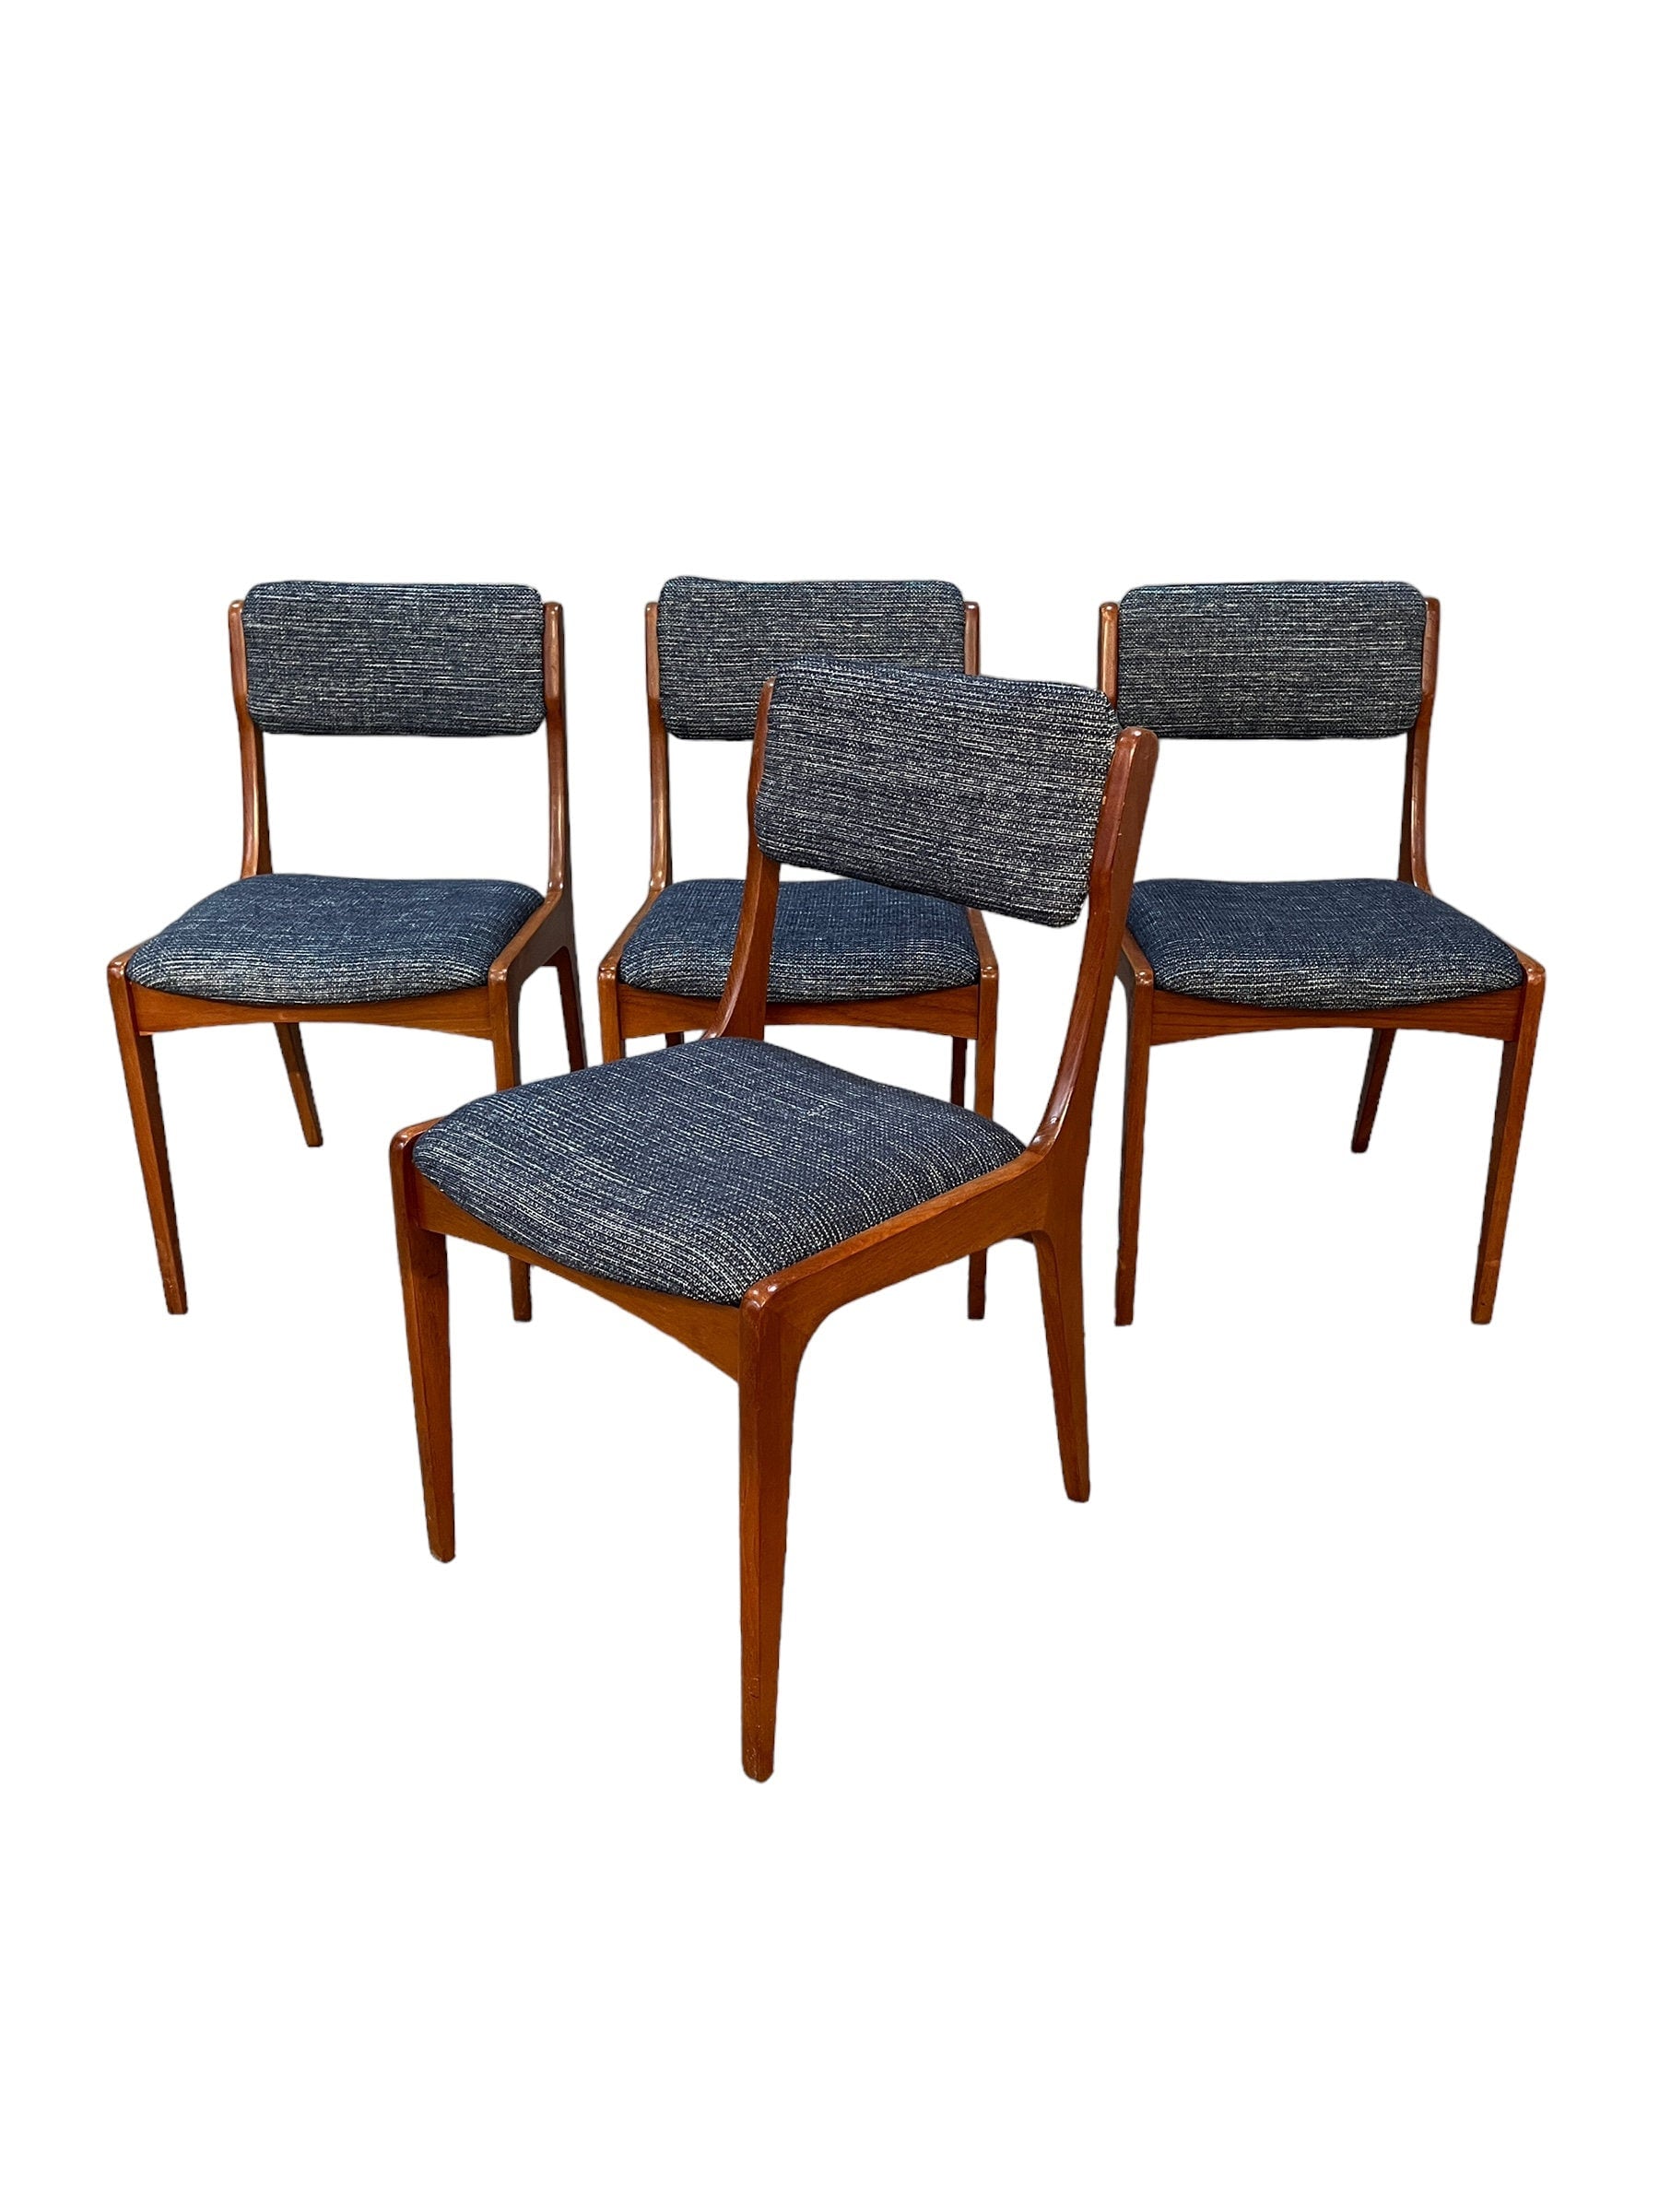 Mid Century danish teak dining chairs set of 4